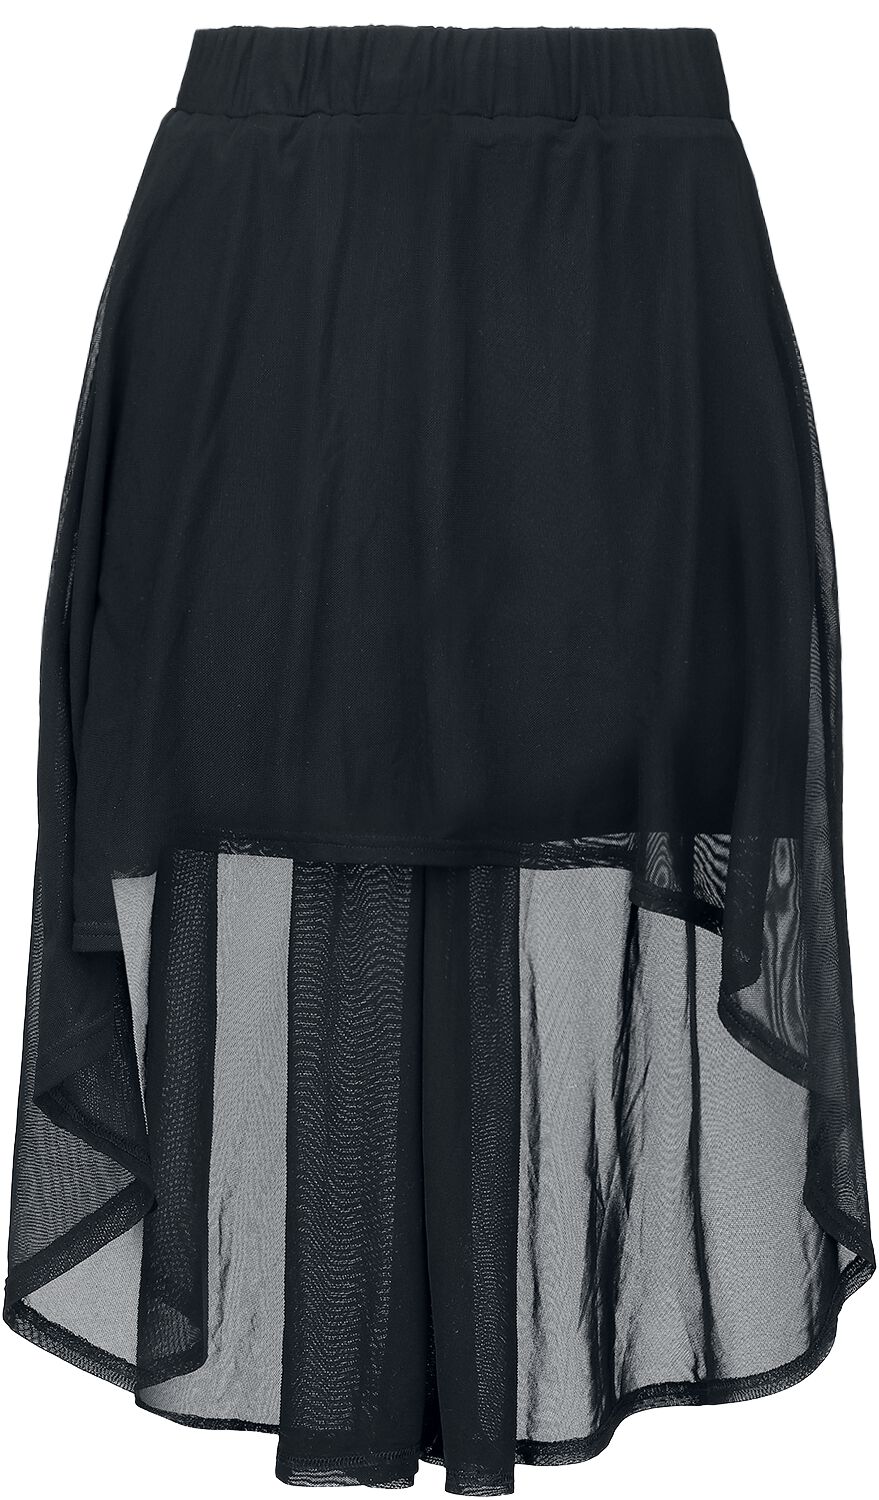 Image of Minigonna Gothic di Gothicana by EMP - Skirt with transparent details - M a XXL - Donna - nero